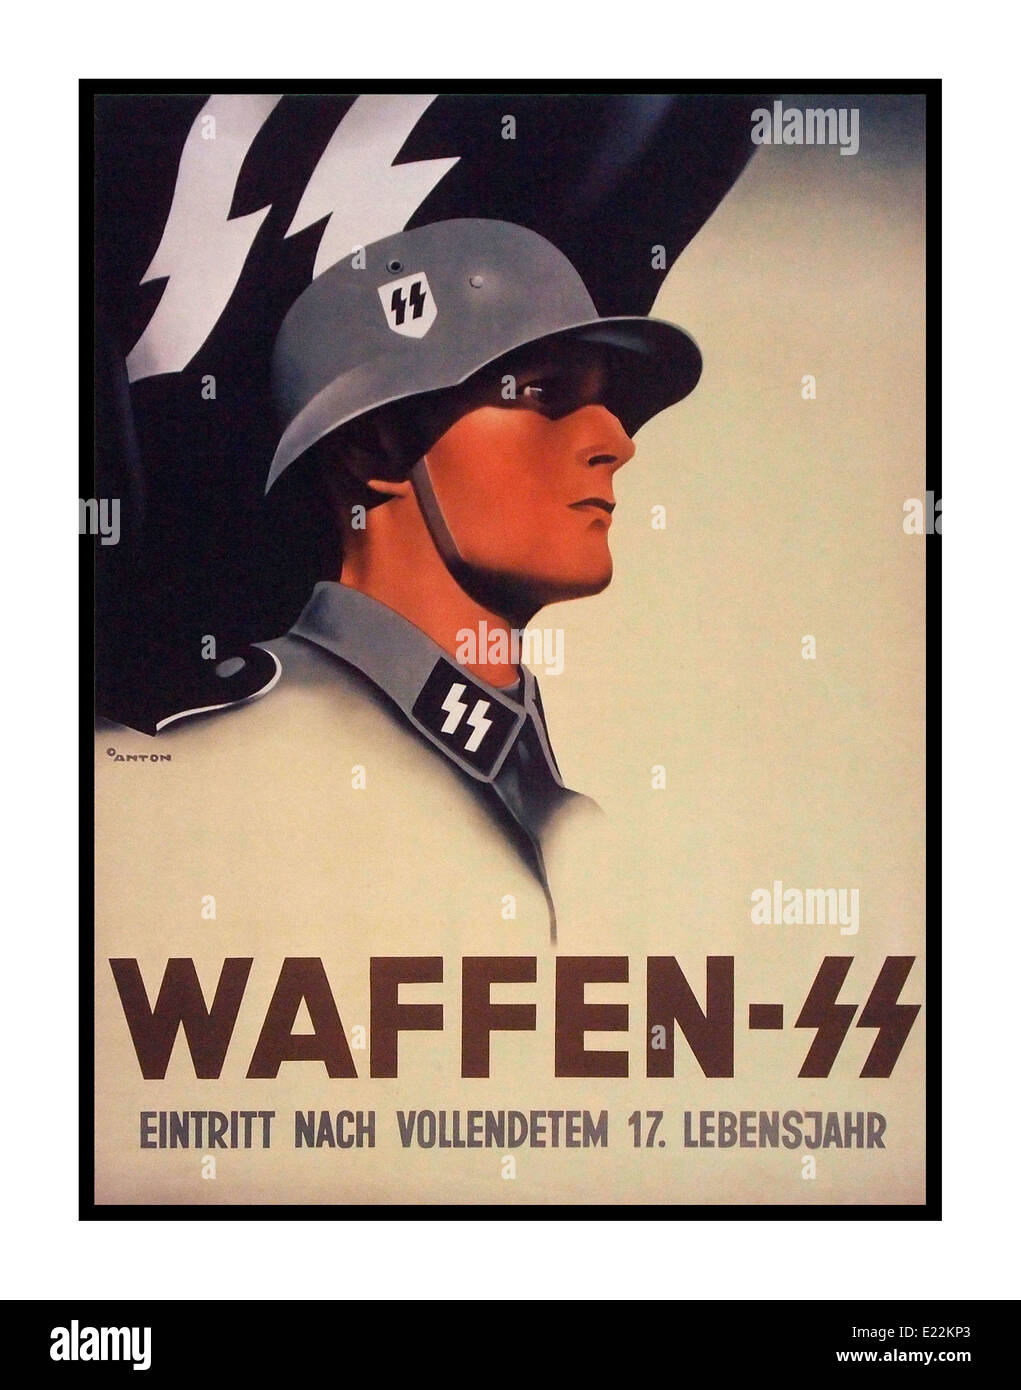 WAFFEN SS PROPAGANDA POSTER 1940's German wartime propaganda recruitment recruiting poster for the Nazi Waffen SS artist ANTON Stock Photo